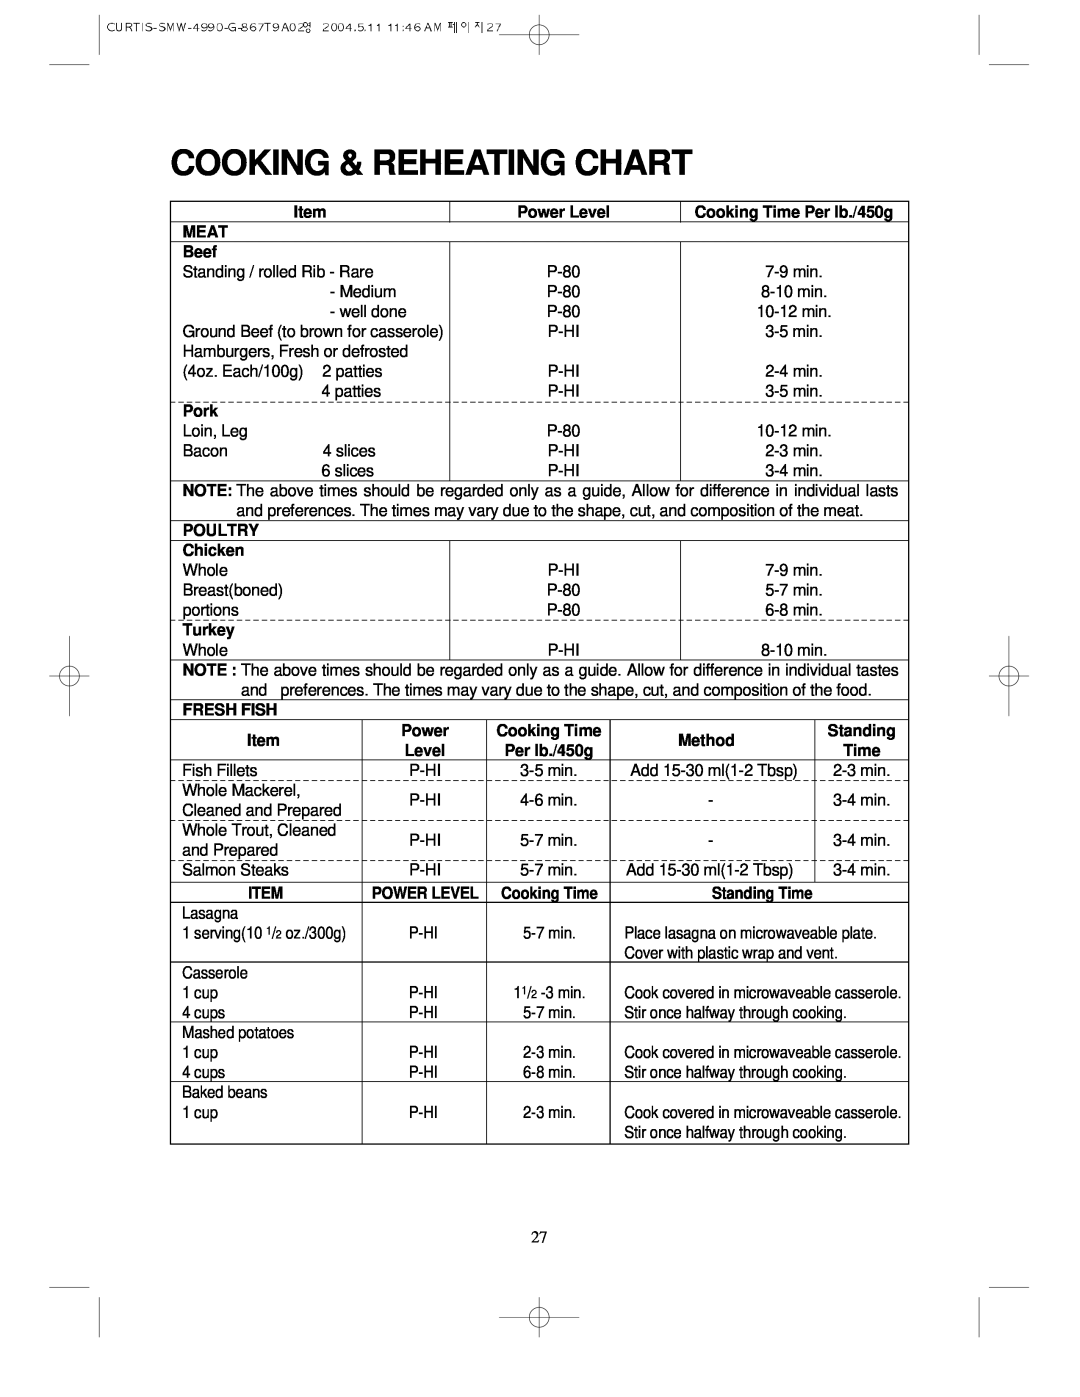 Sunbeam SMW-4990 Cooking & Reheating Chart, Power Level, Meat, Beef, Pork, Poultry, Chicken, Turkey, Fresh Fish, Method 